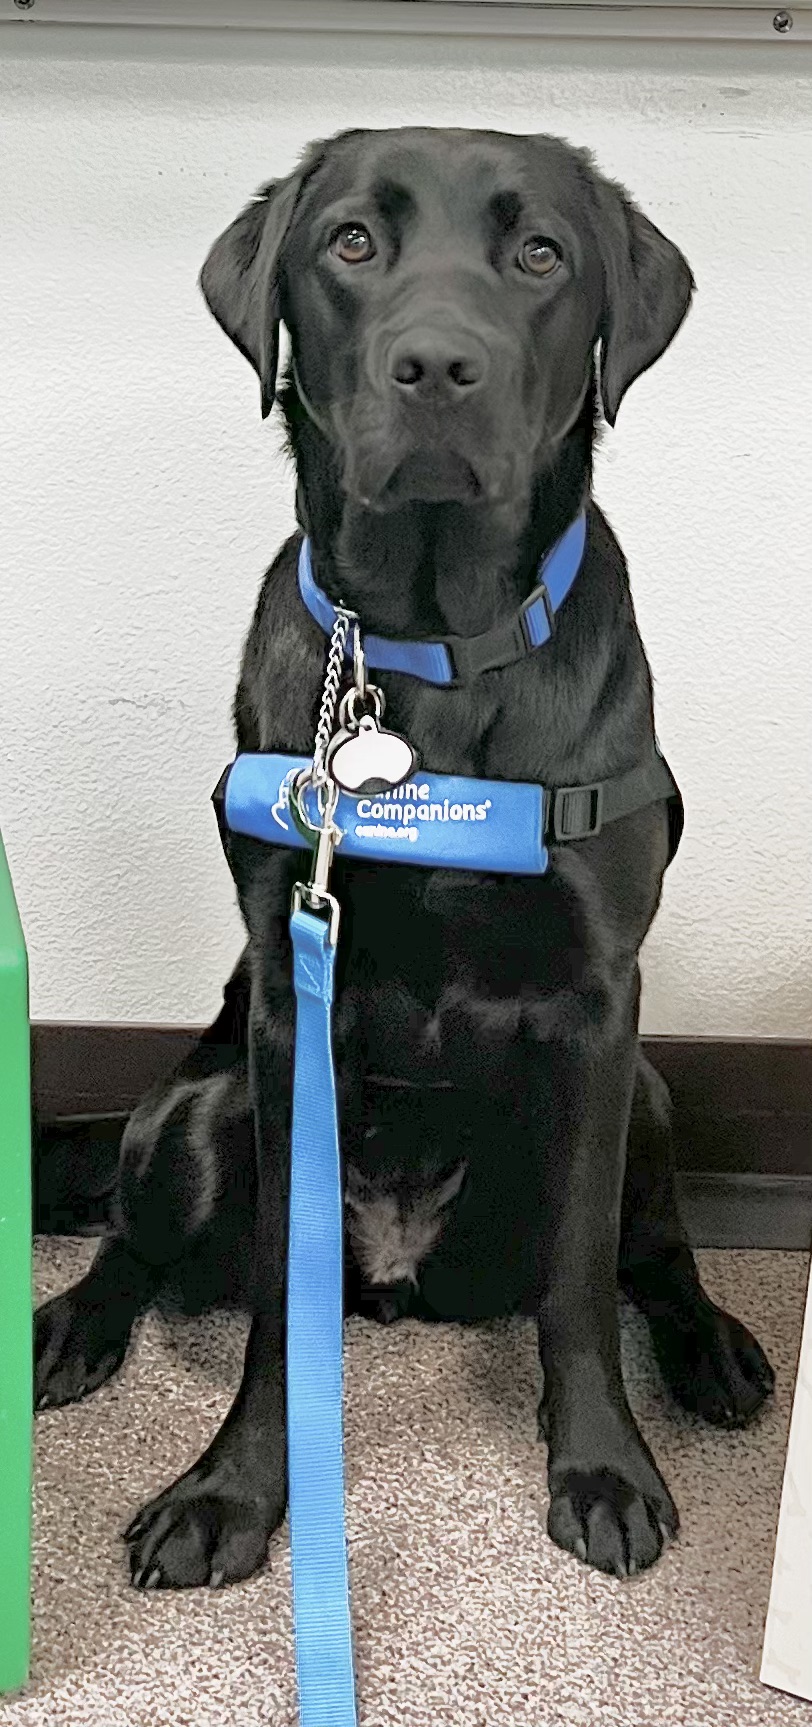 Canine companions facility dog, black lab golden cross